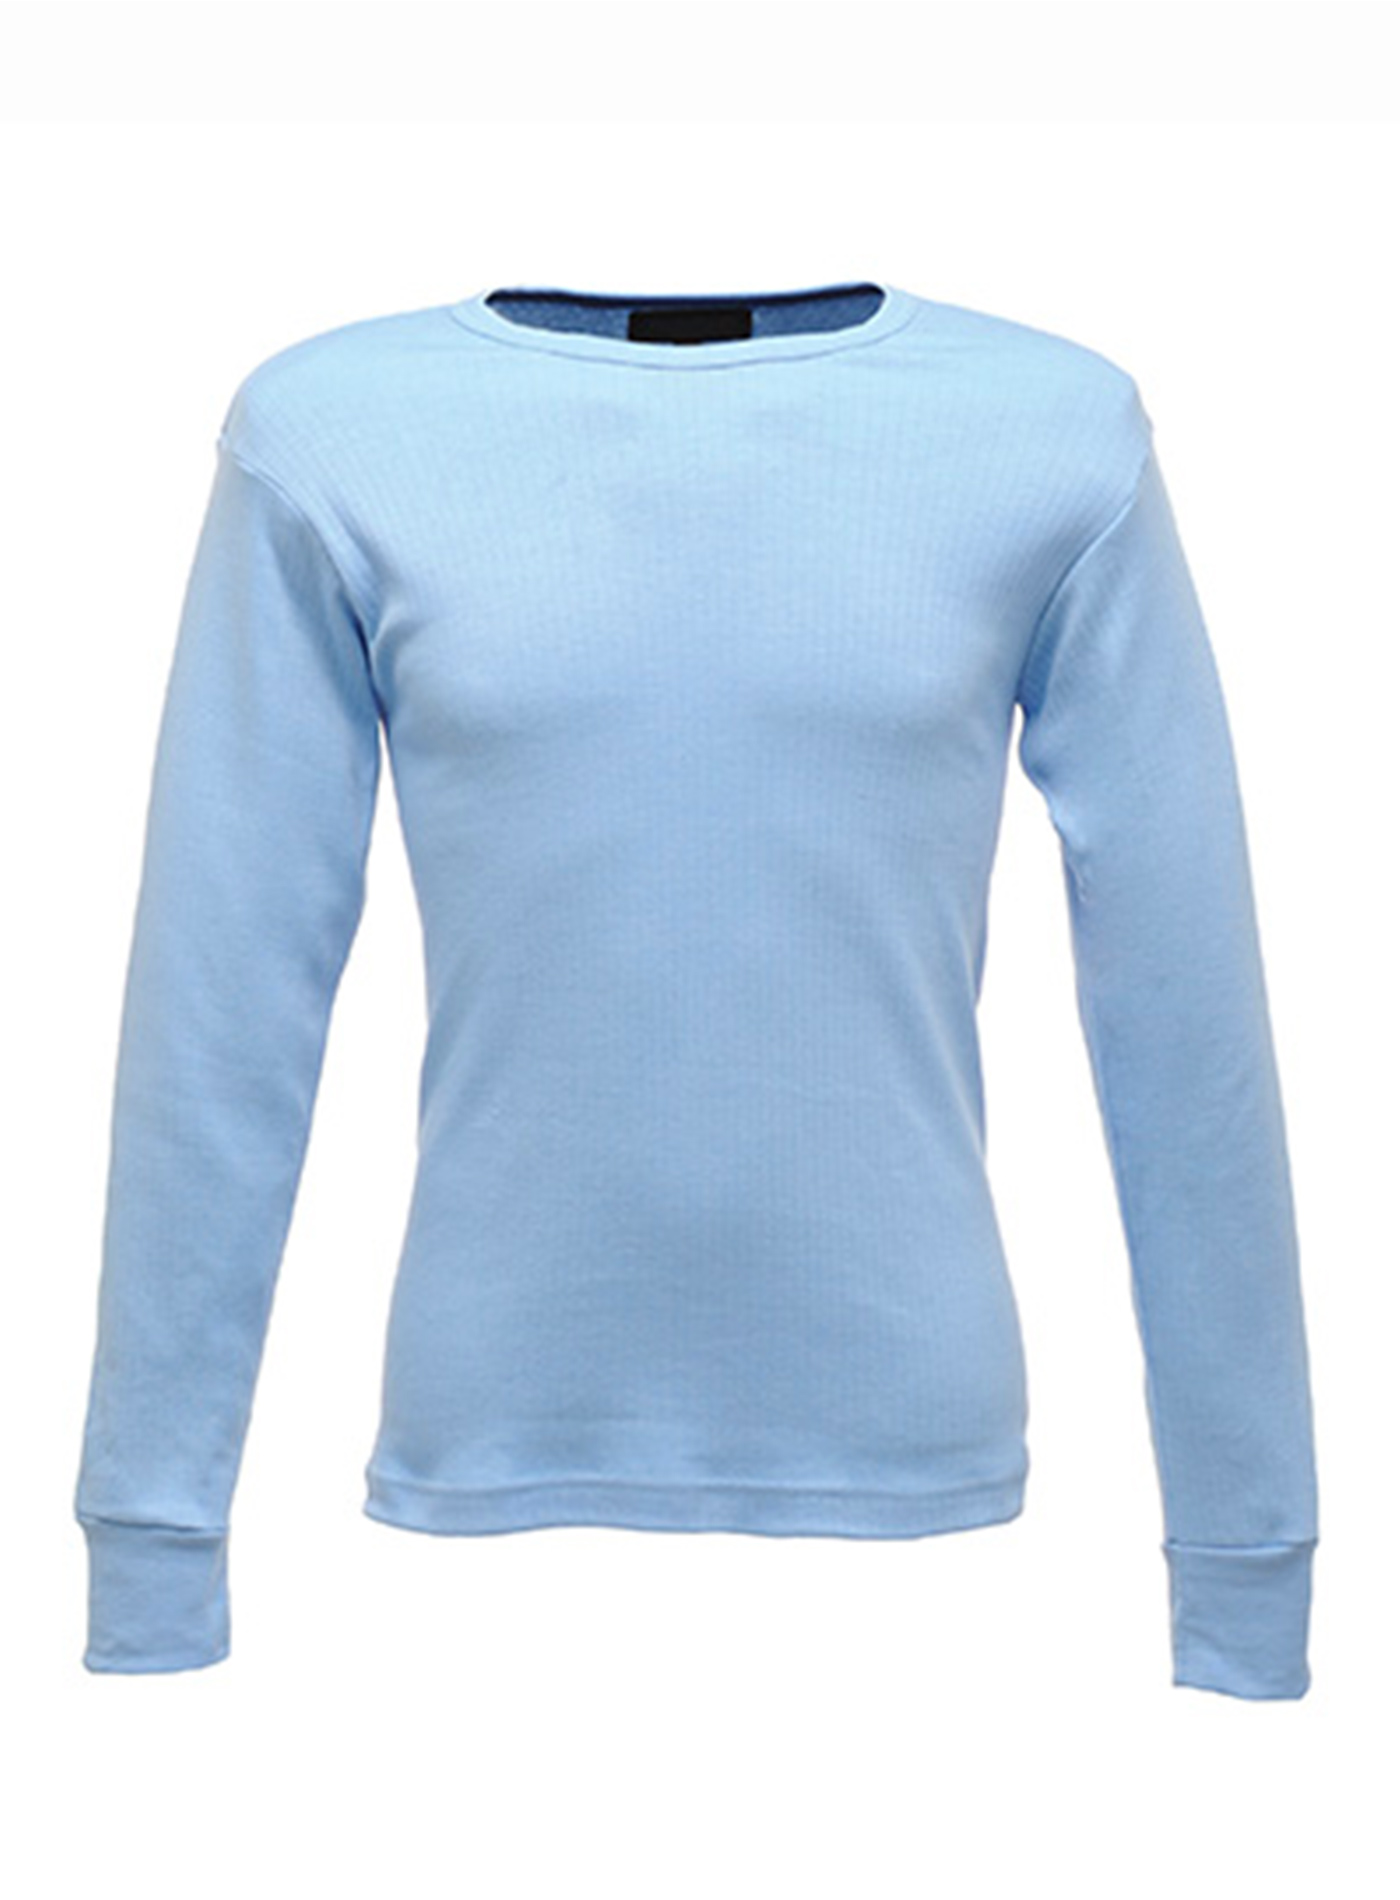 Pánské tričko Thermal - Modrá XL